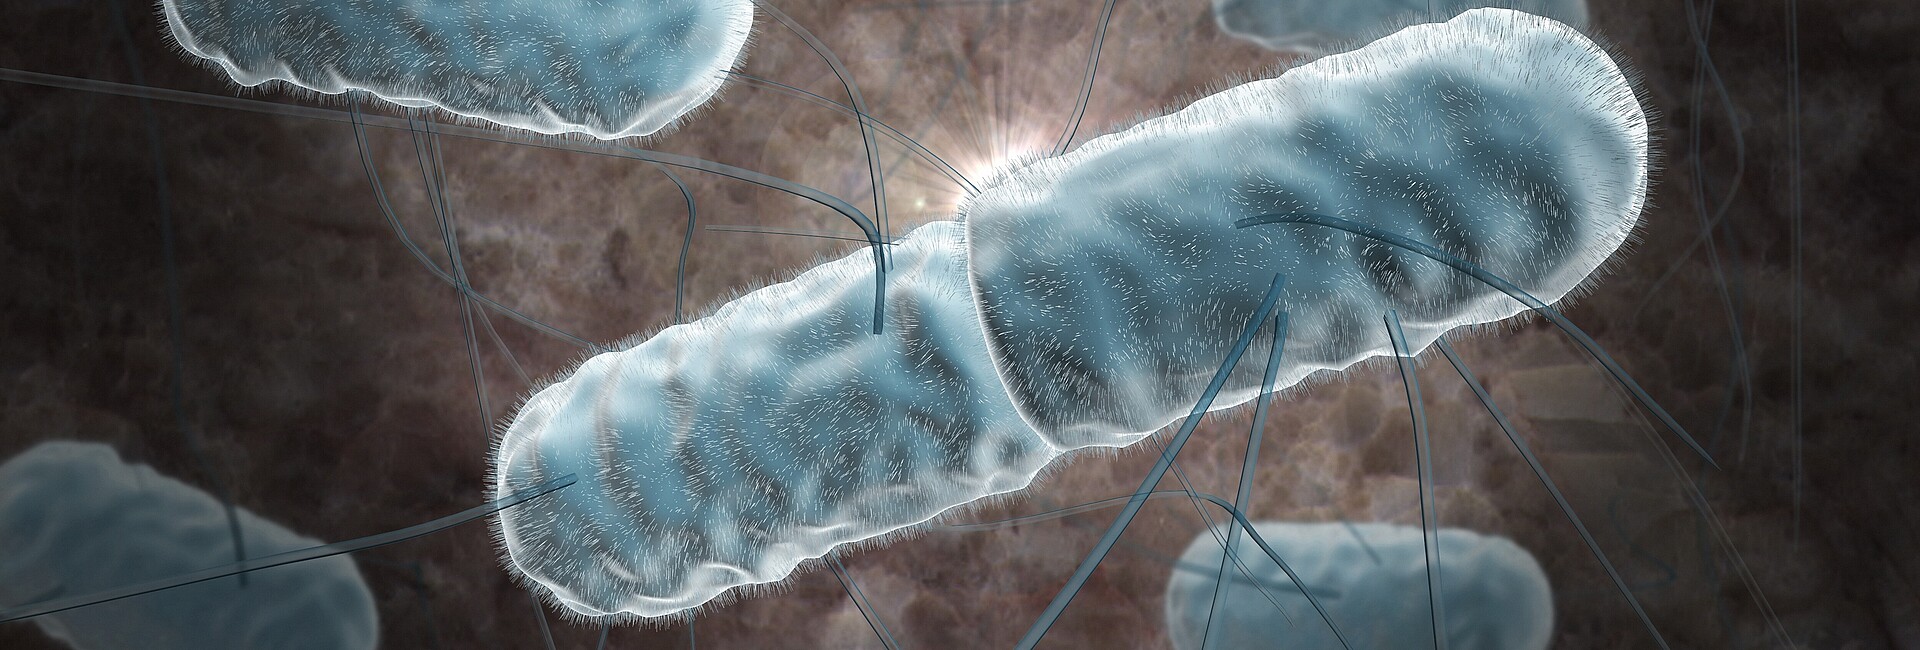 Bild zeigt Listeriose-Bakterien unter dem Mikroskop